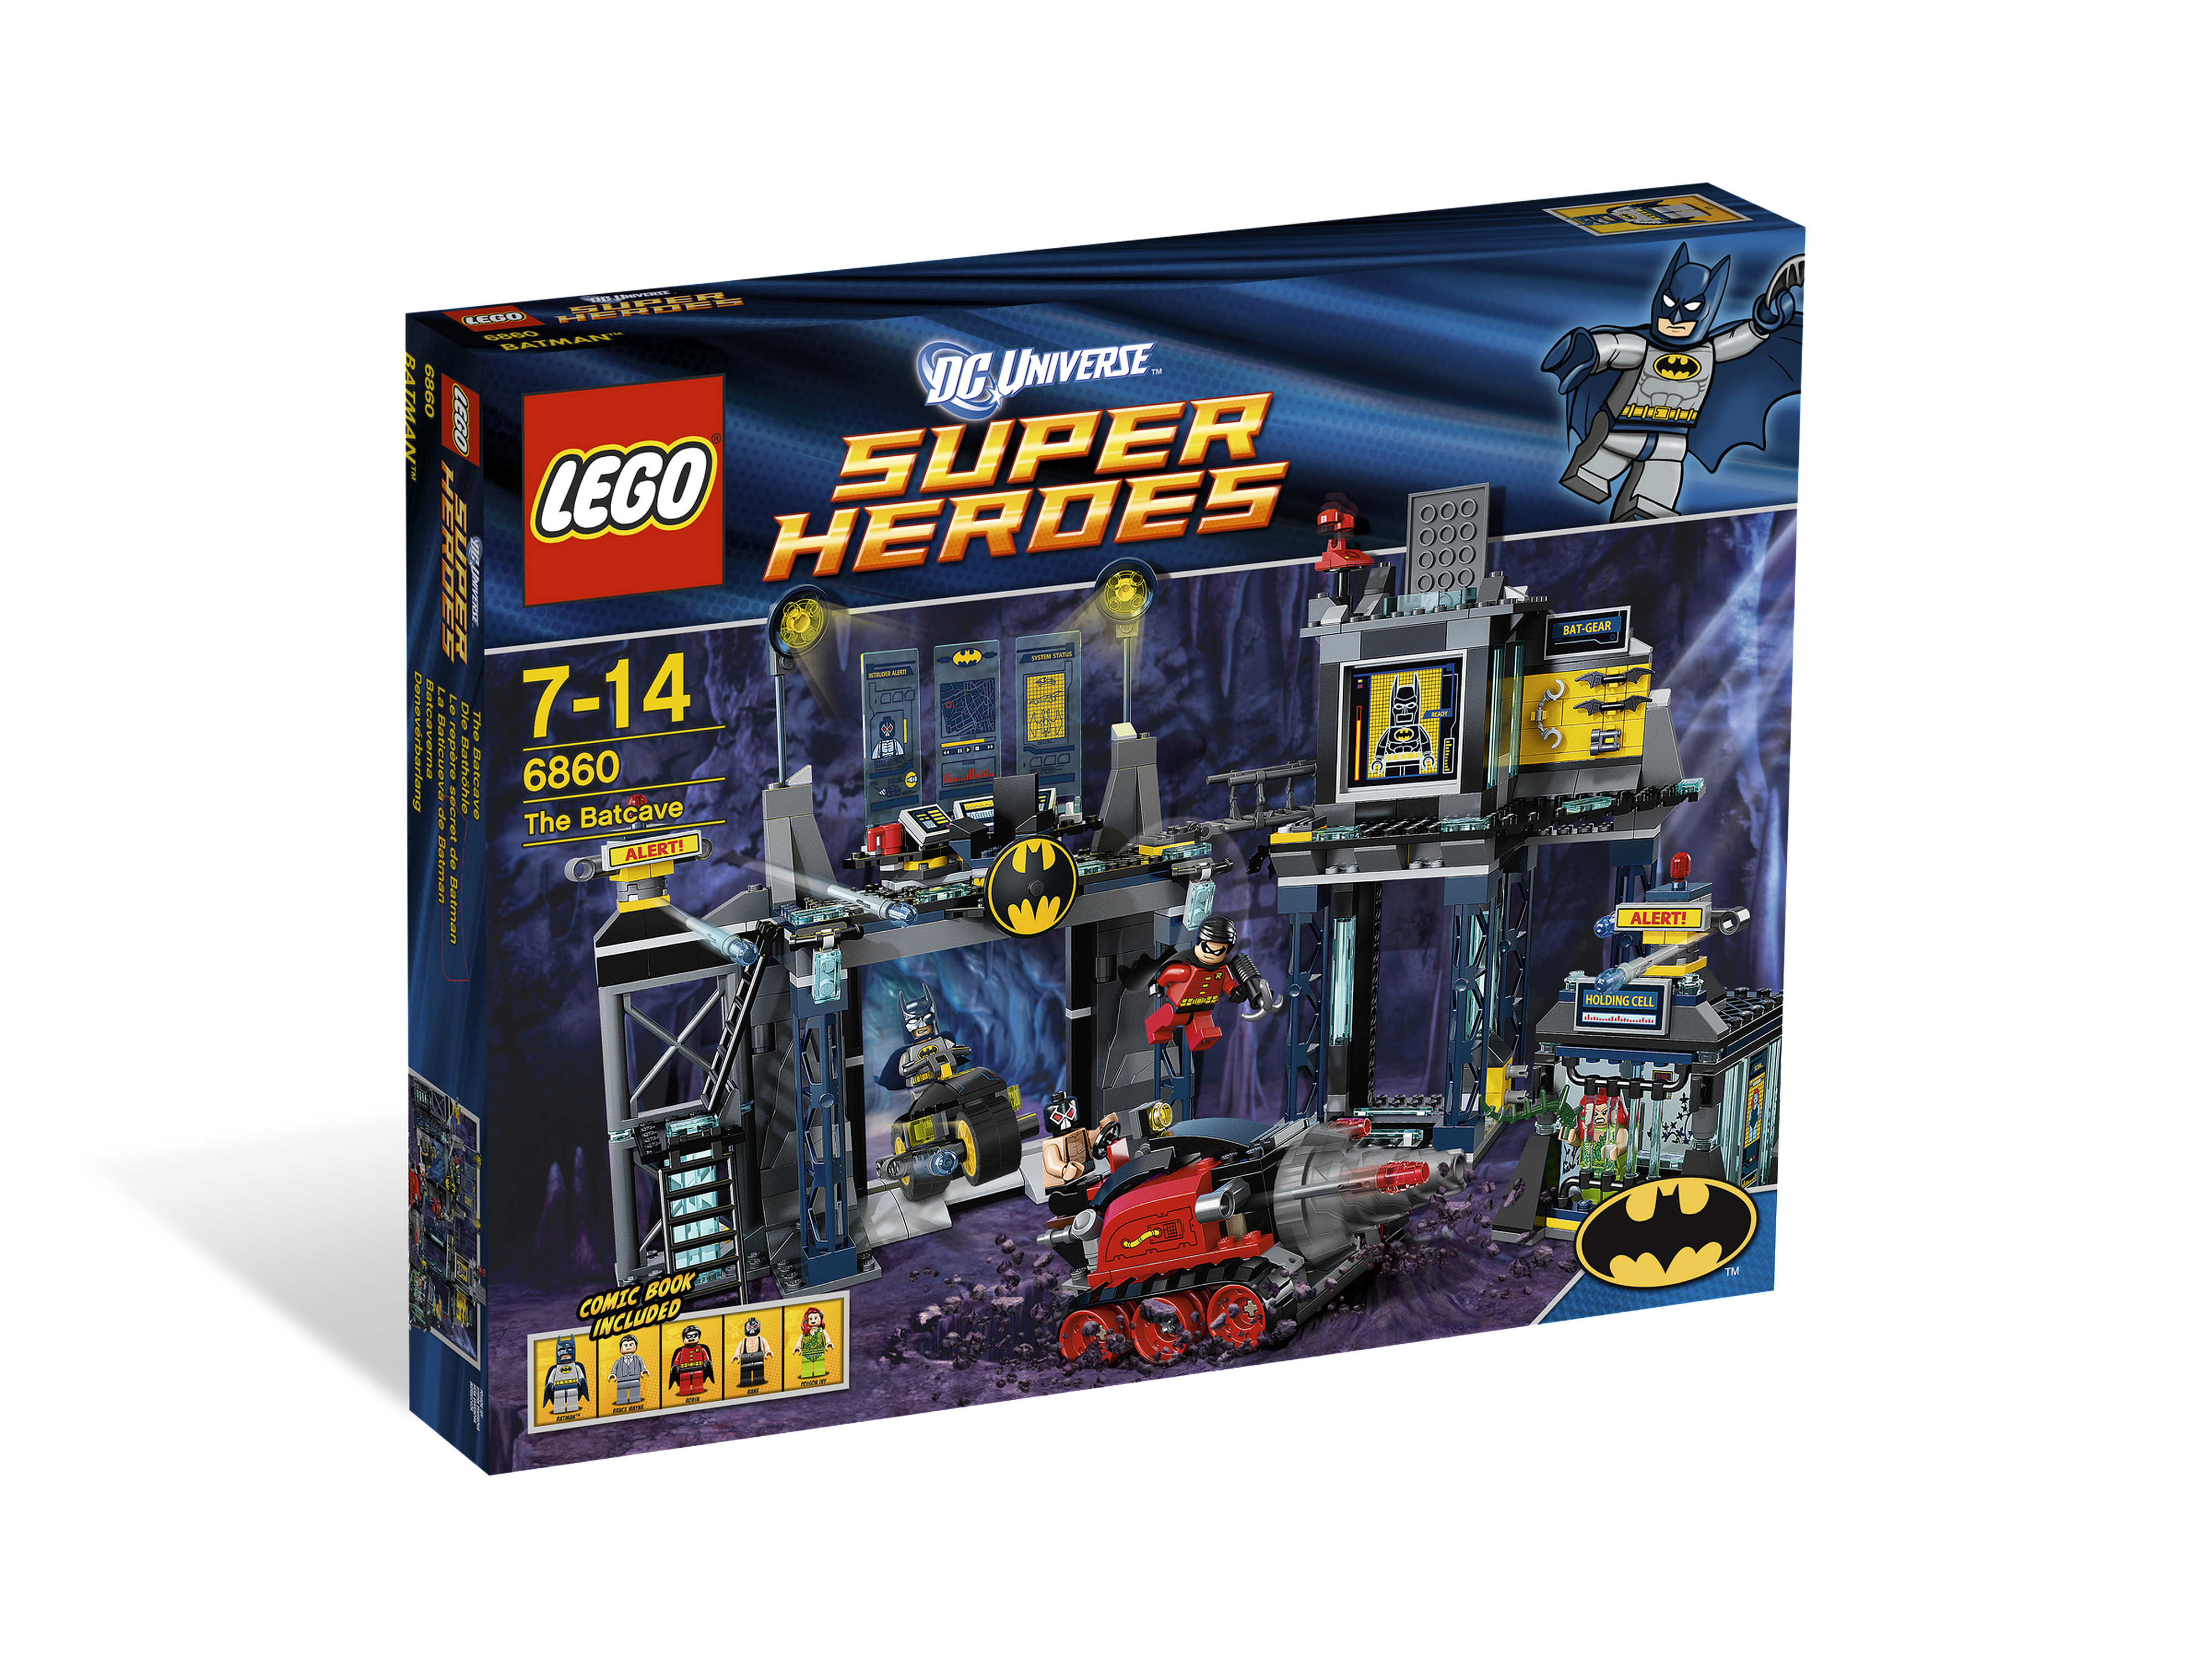 Batcave - LEGO Batman 3: Beyond Gotham Guide - IGN